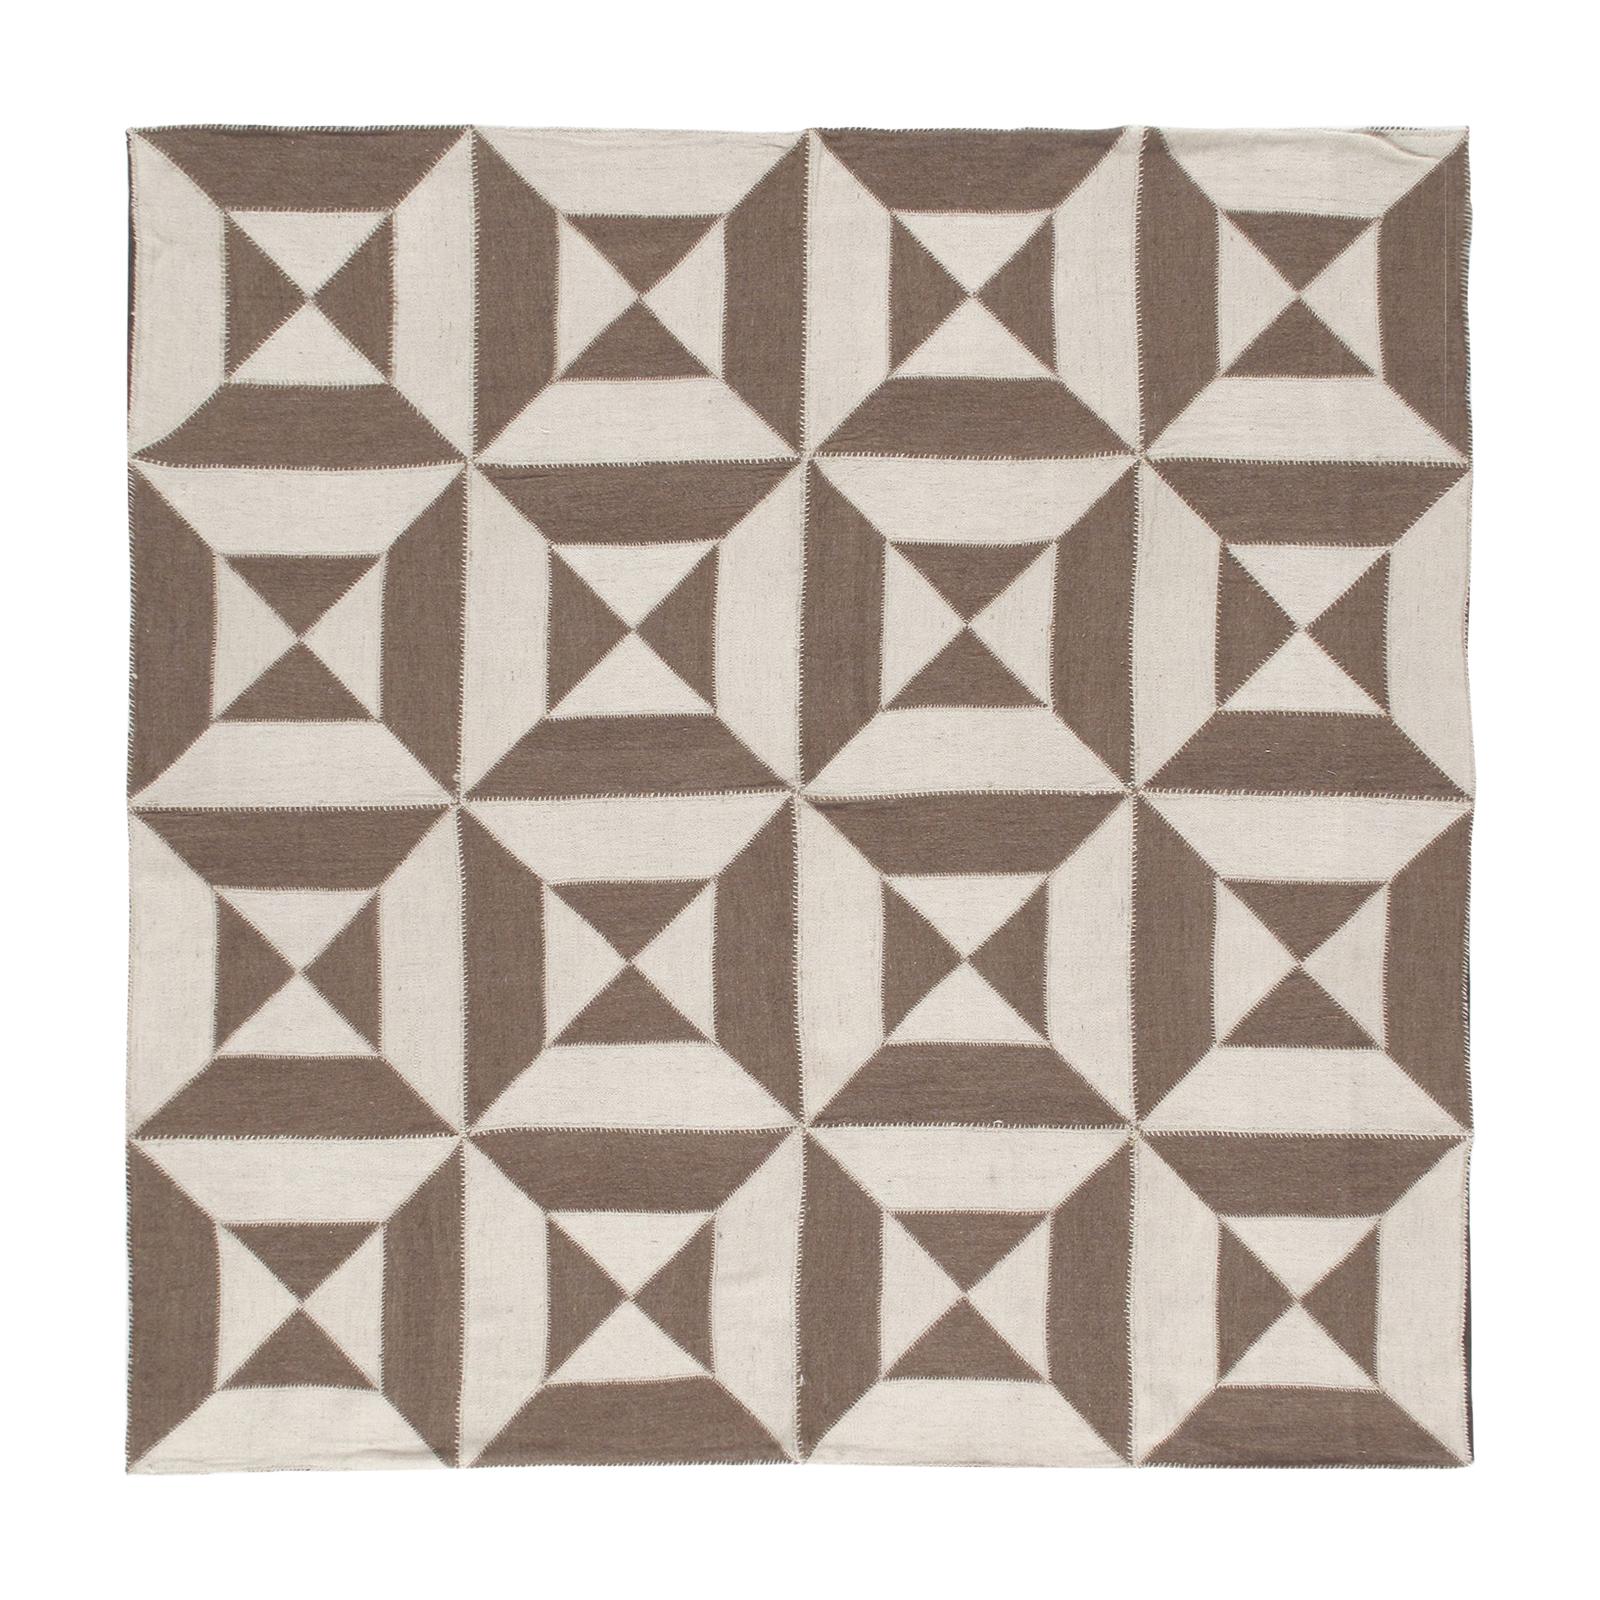 Modern Shiraz Handwoven Flatweave Geometric Square Rug in Beige and Brown